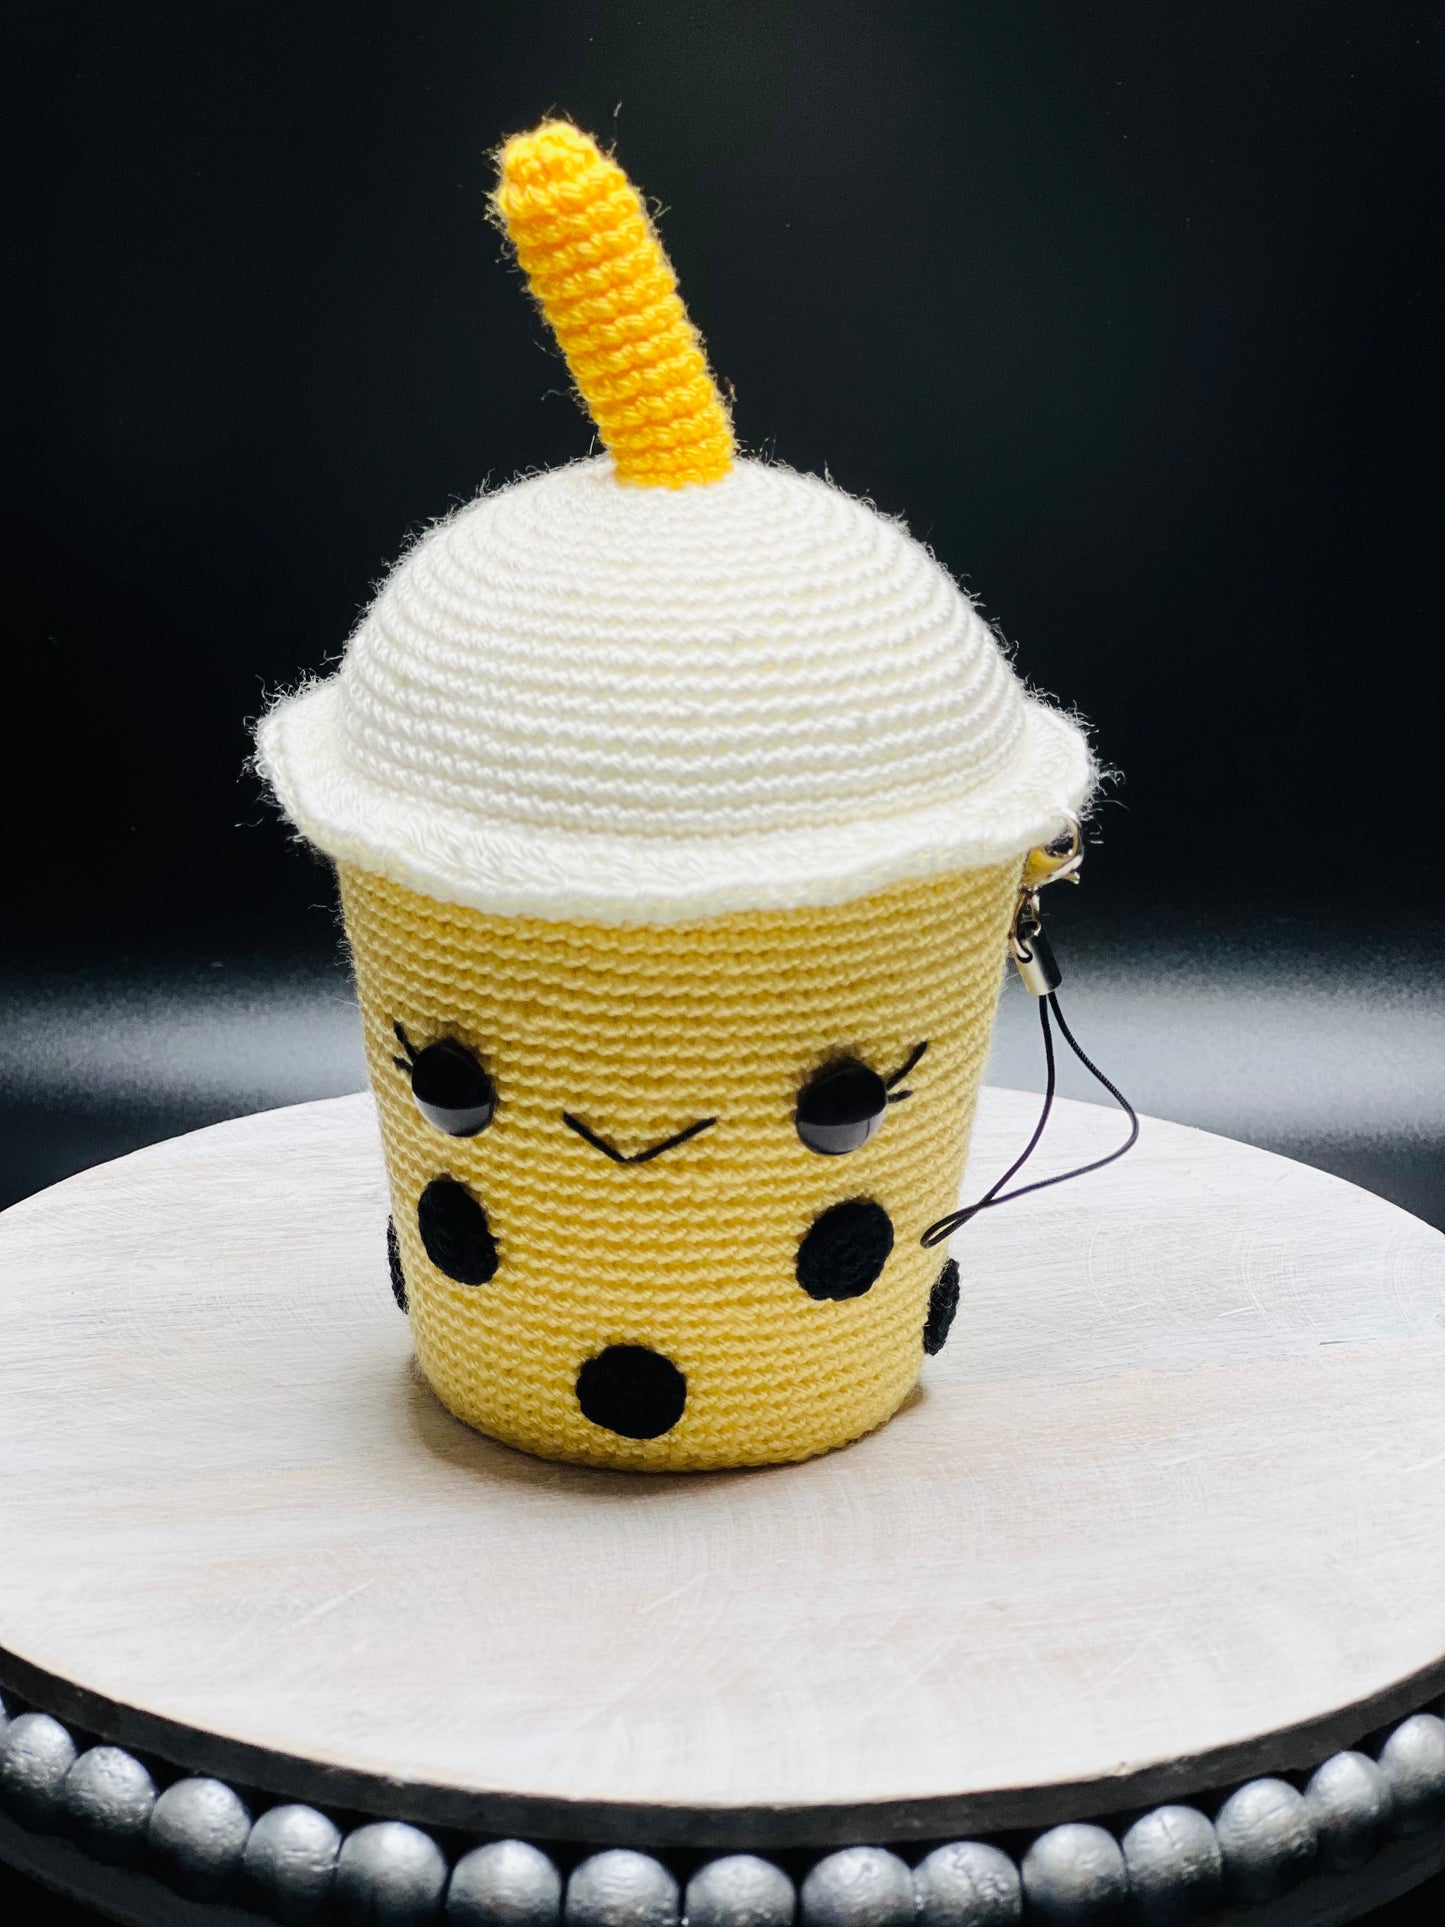 Stuffed Boba Drink Toy - Crochet Knitted Amigurumi Toy